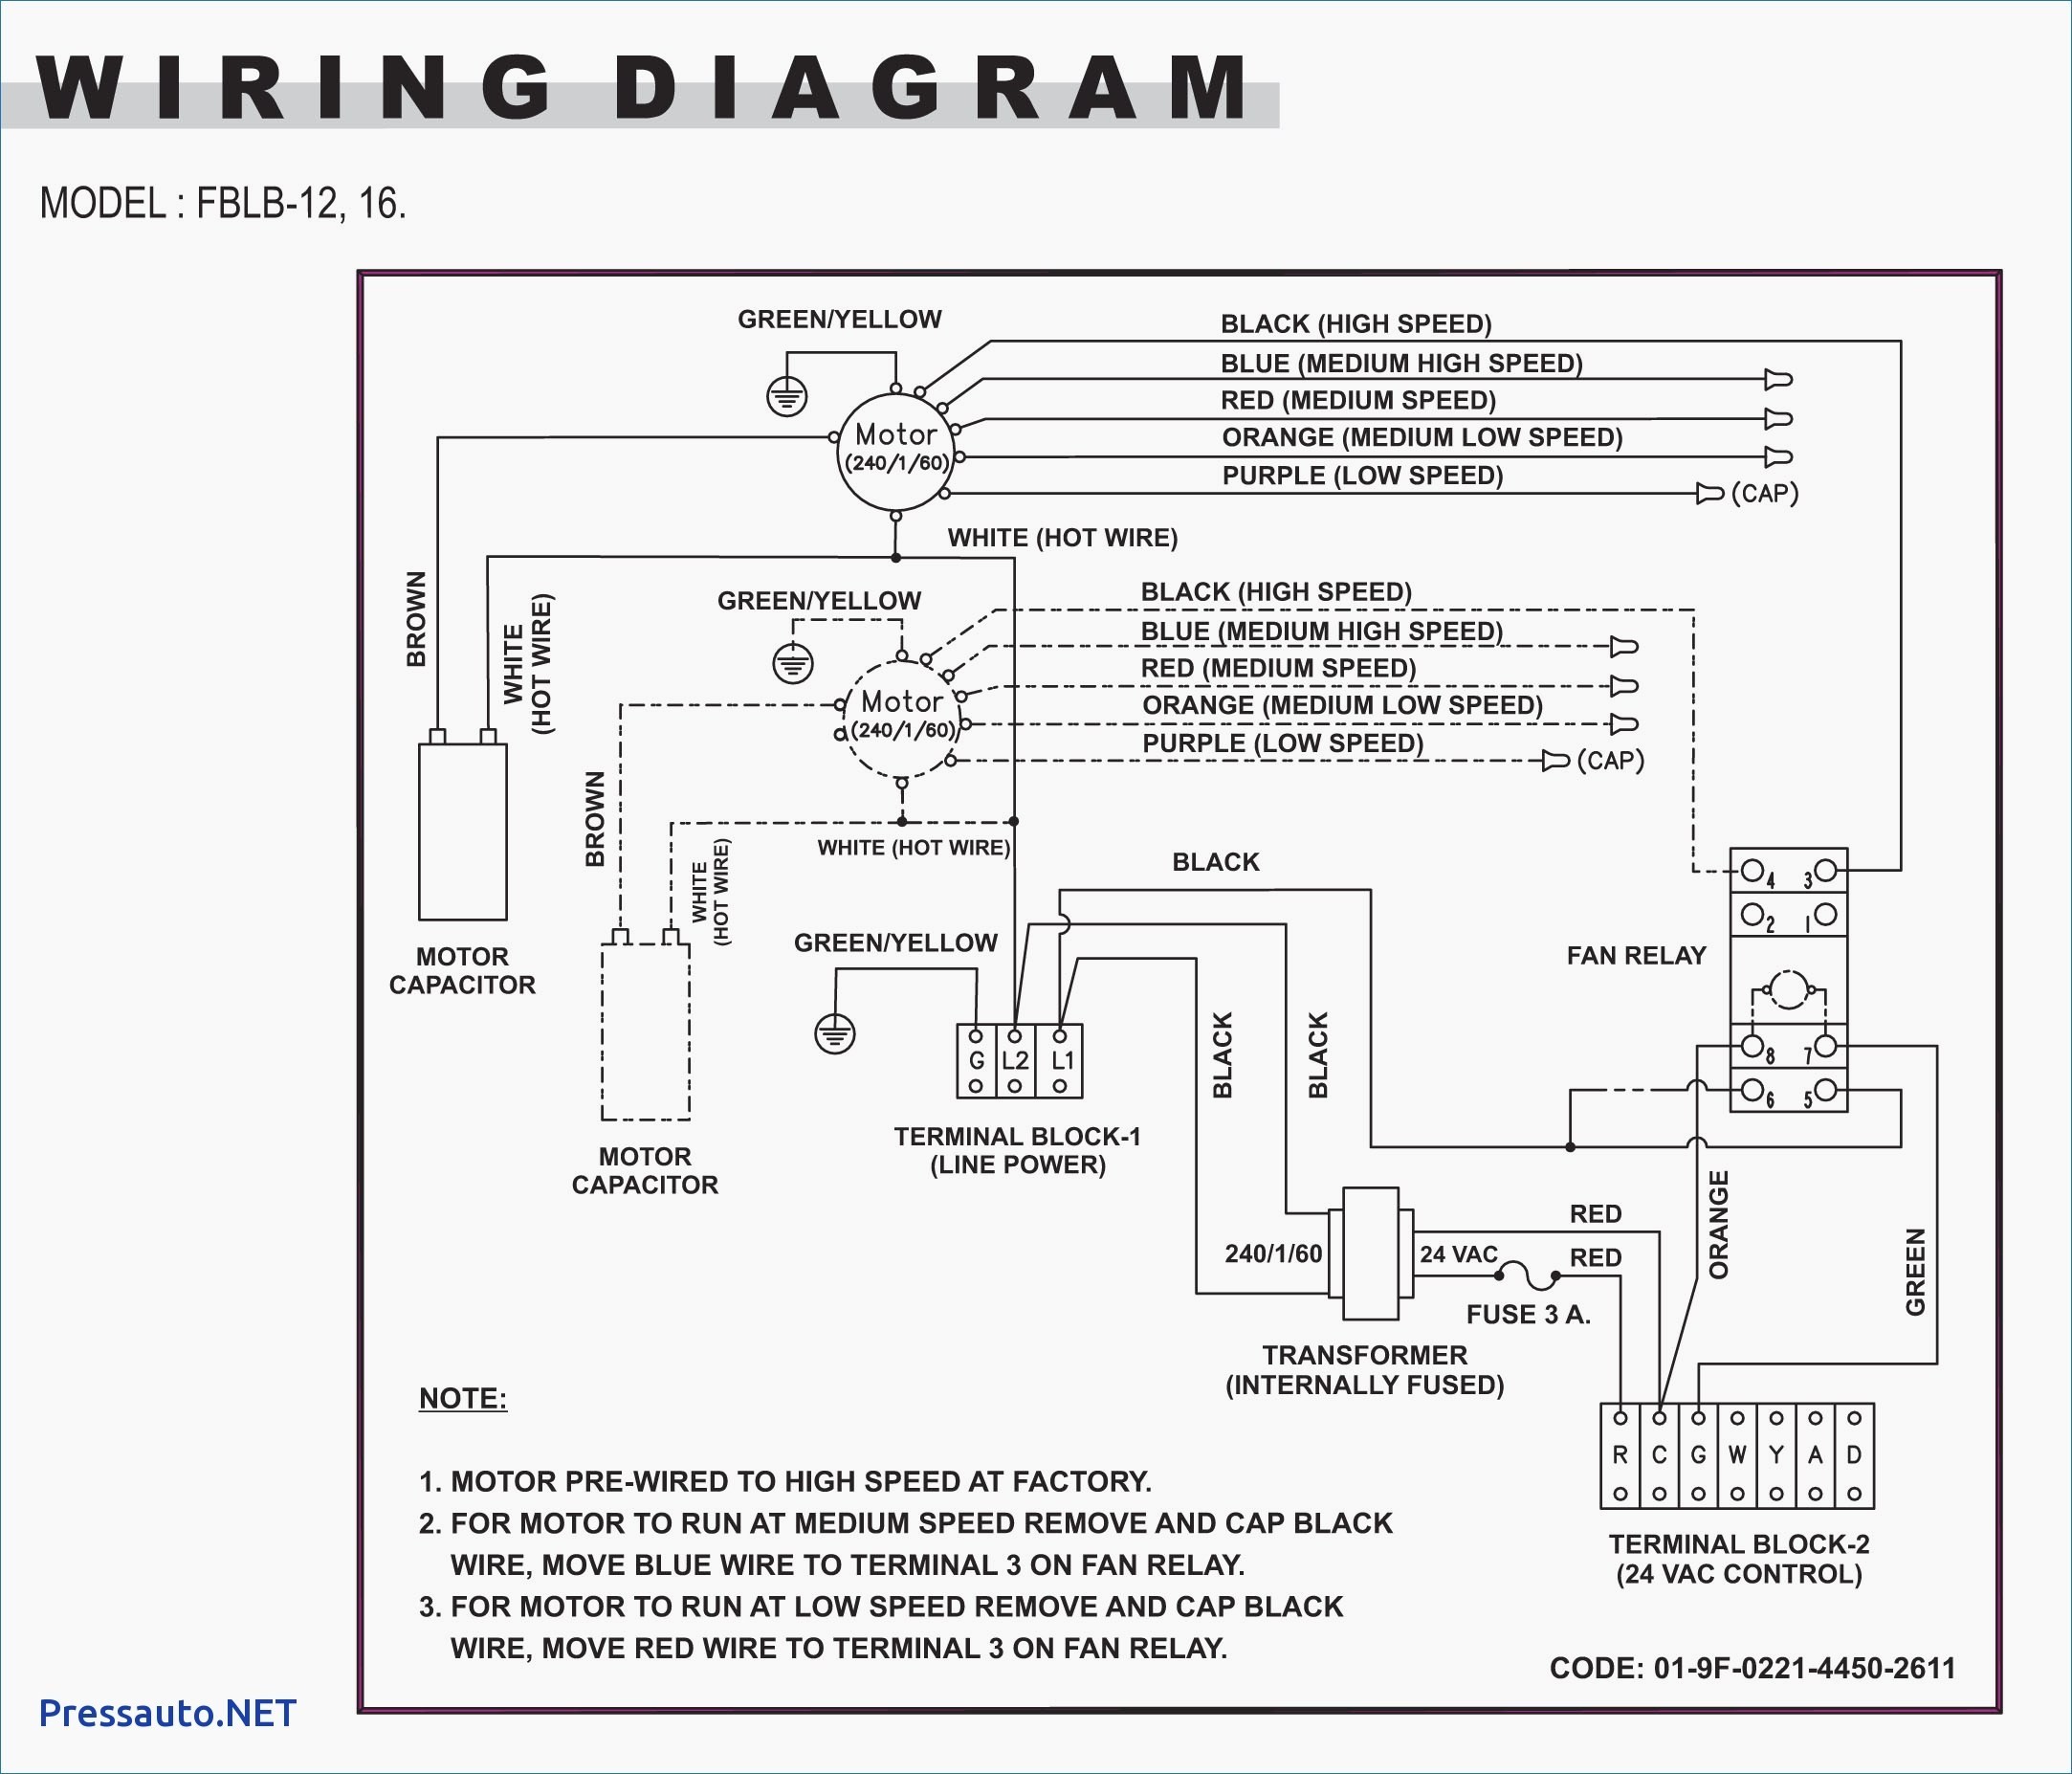 Motor Space Heater Wiring Diagram Motor Heater Wiring Diagram Fresh Dayton Garage Heaters Wiring Diagram